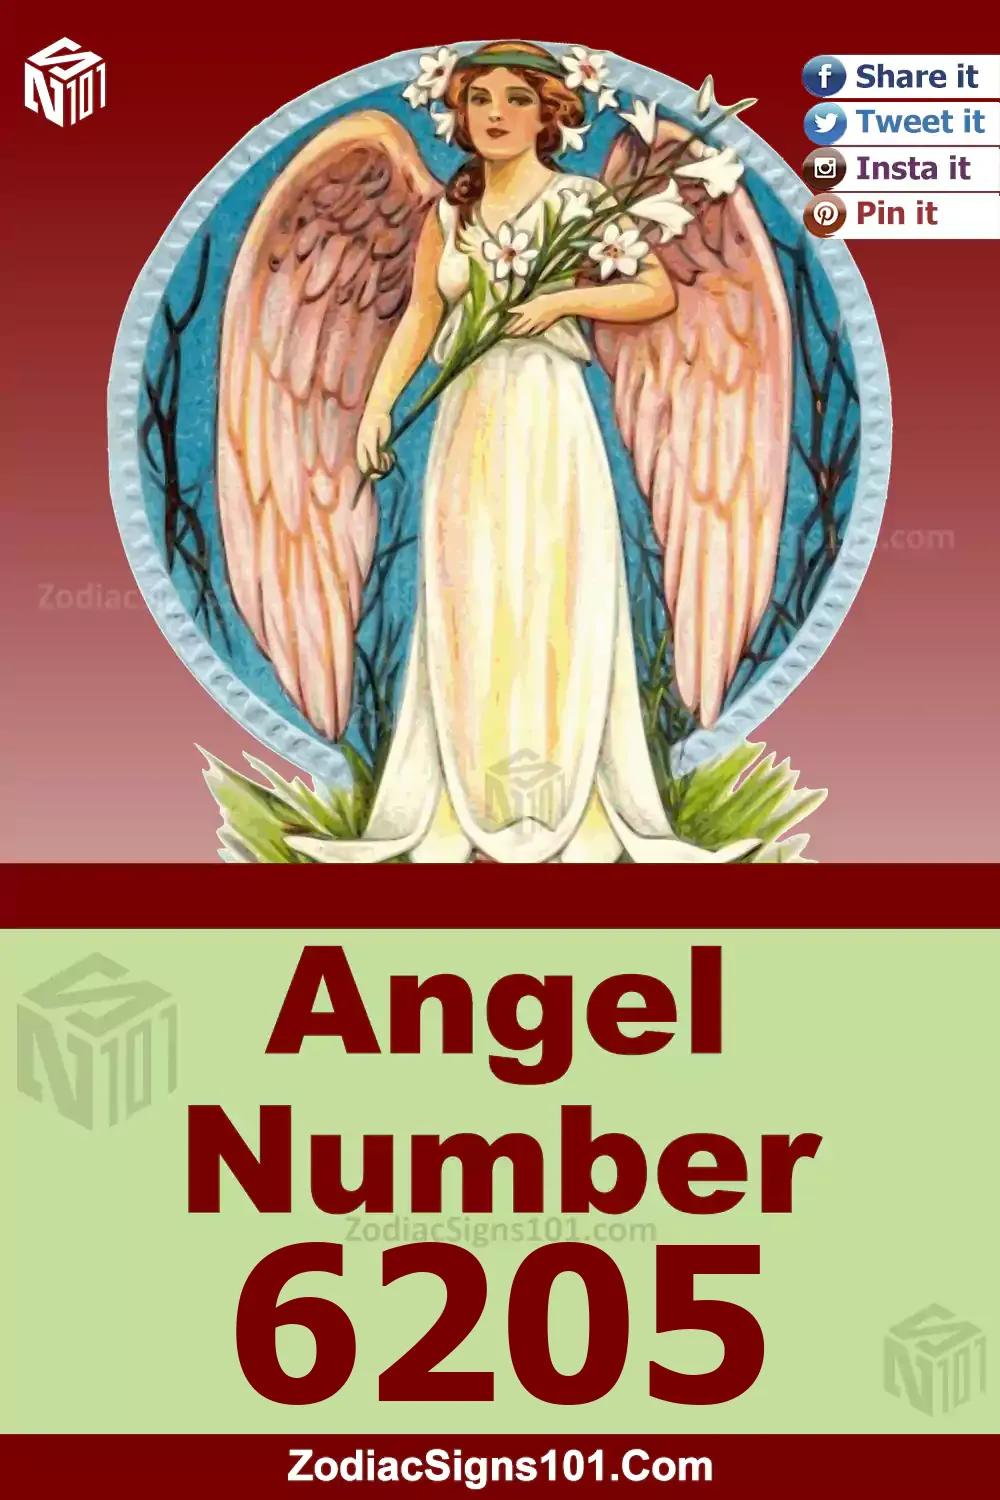 6205-Angel-Number-Meaning.jpg